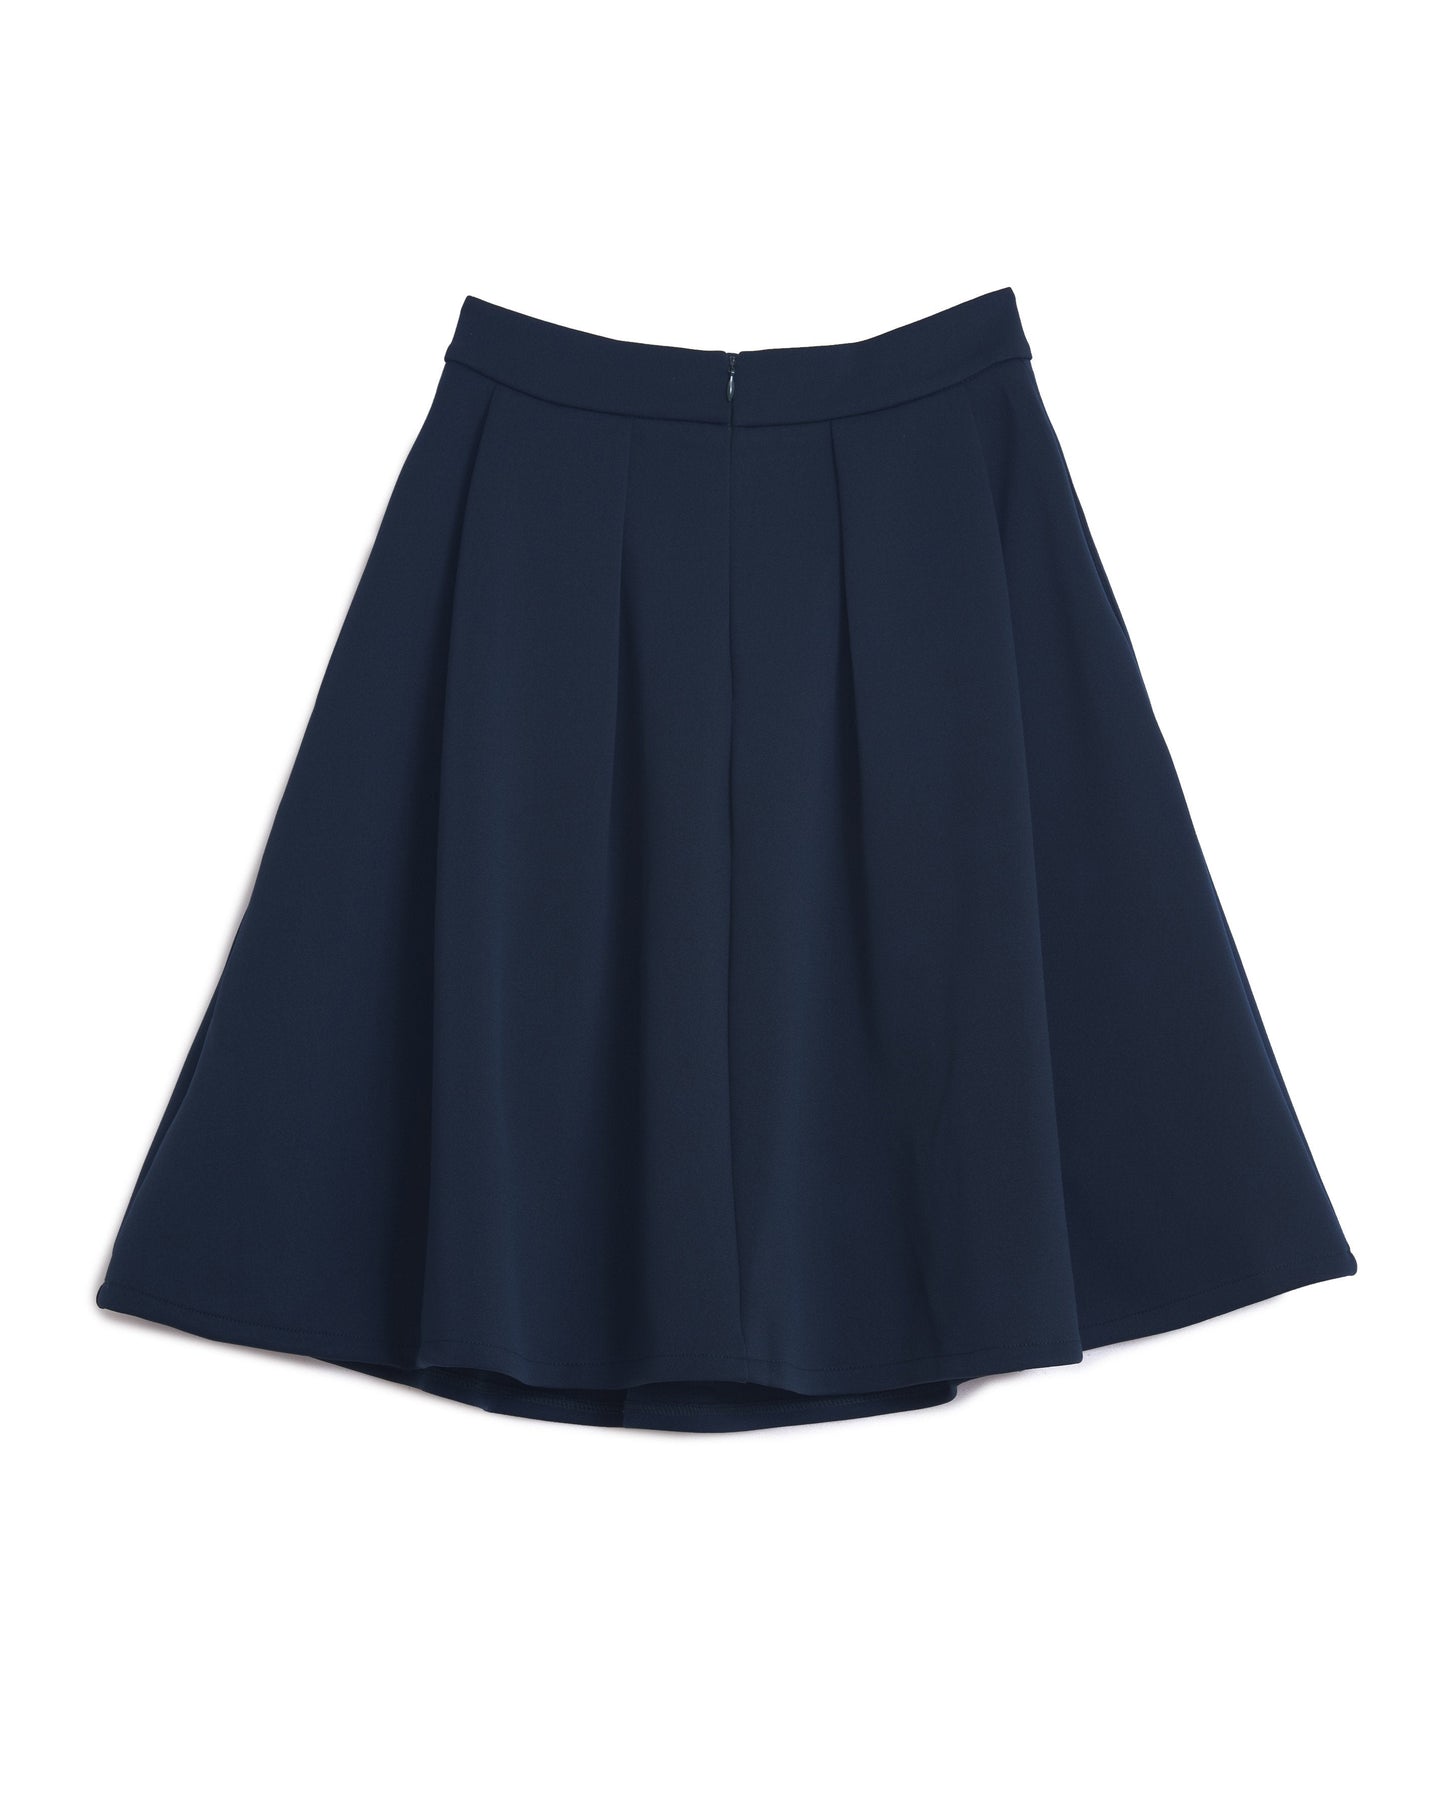 Ribbon Skirt (with pocket) 15047